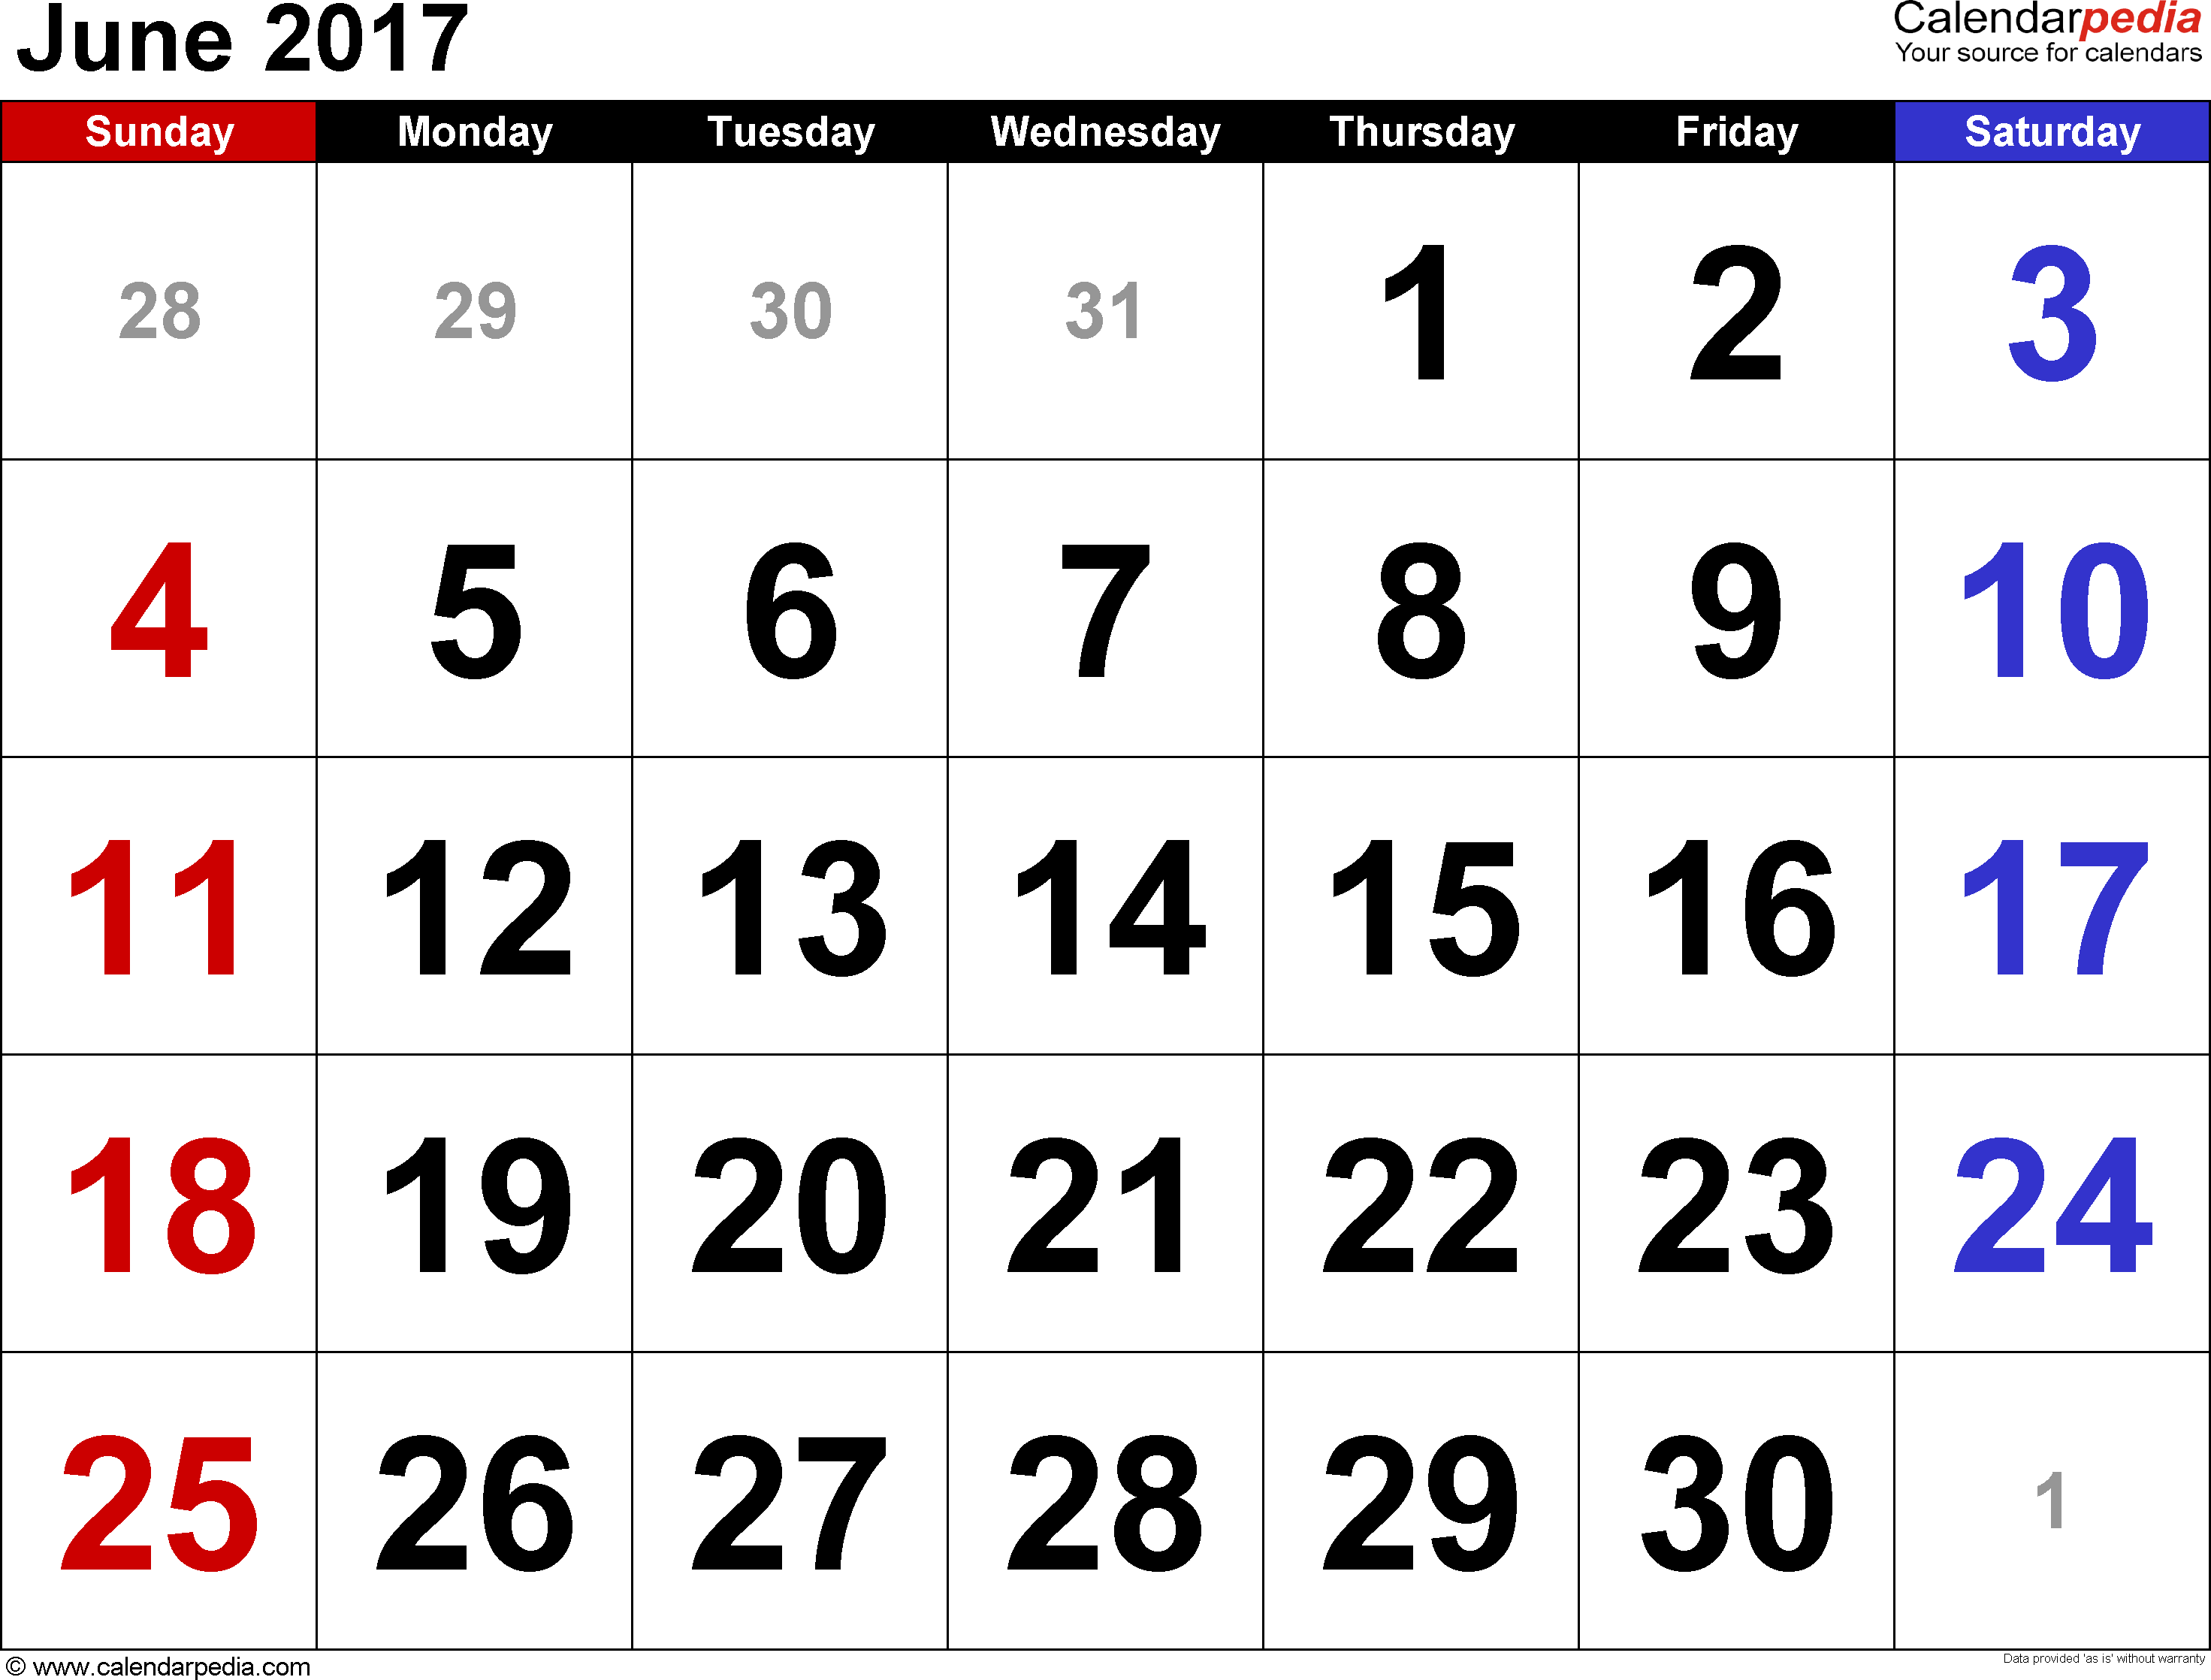 June 2017 Calendars for Word, Excel & PDF